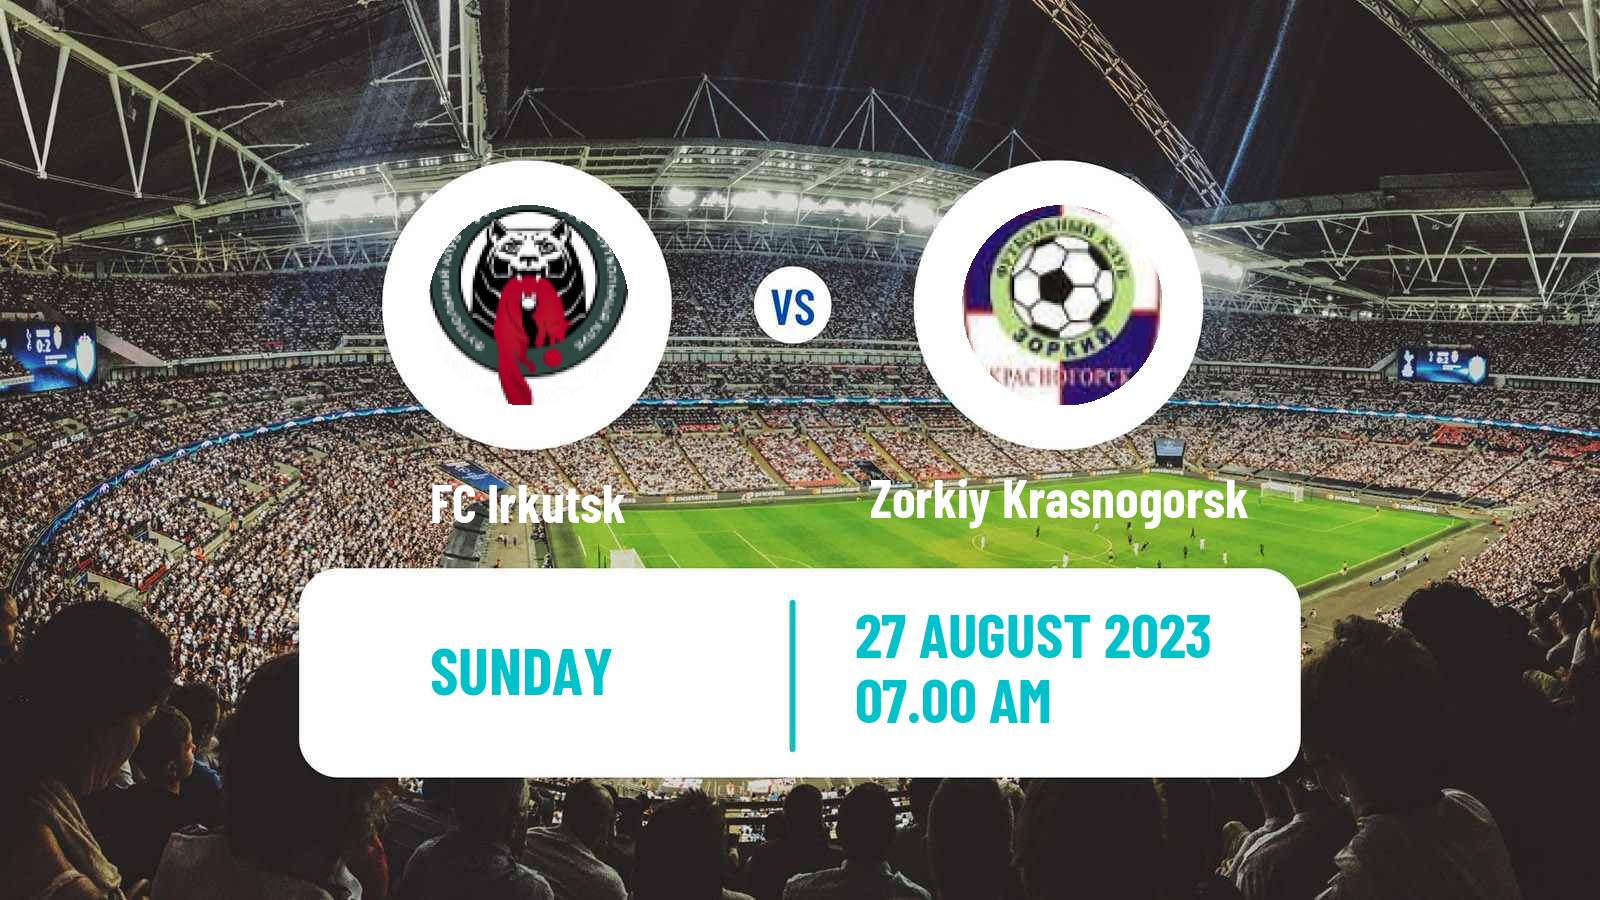 Soccer FNL 2 Division B Group 2 Irkutsk - Zorkiy Krasnogorsk